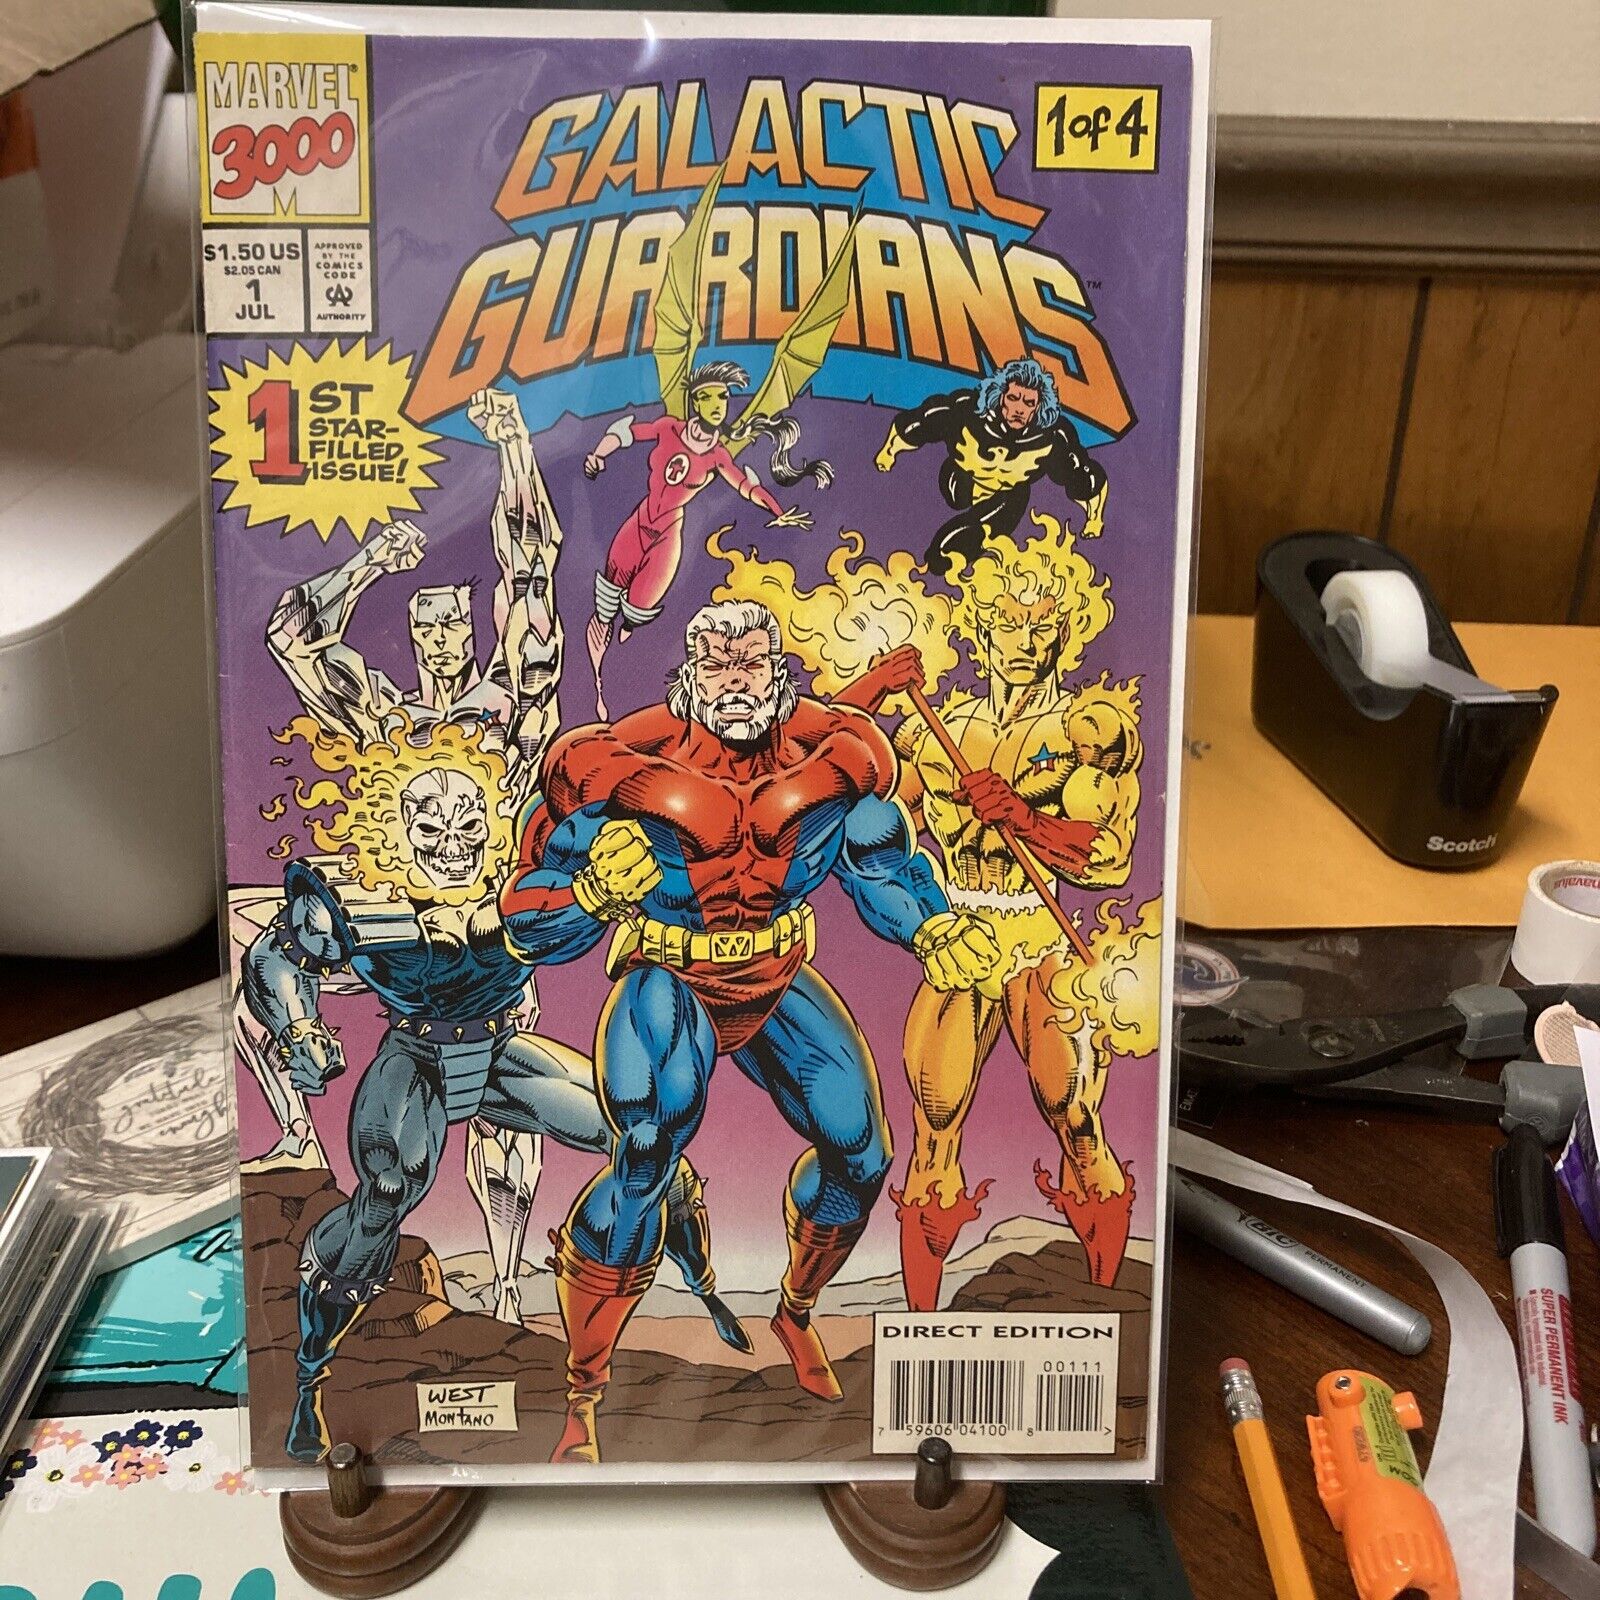 Galactic Guardians #1 (07/1994) DMarvel Comics Mini Series Future Past